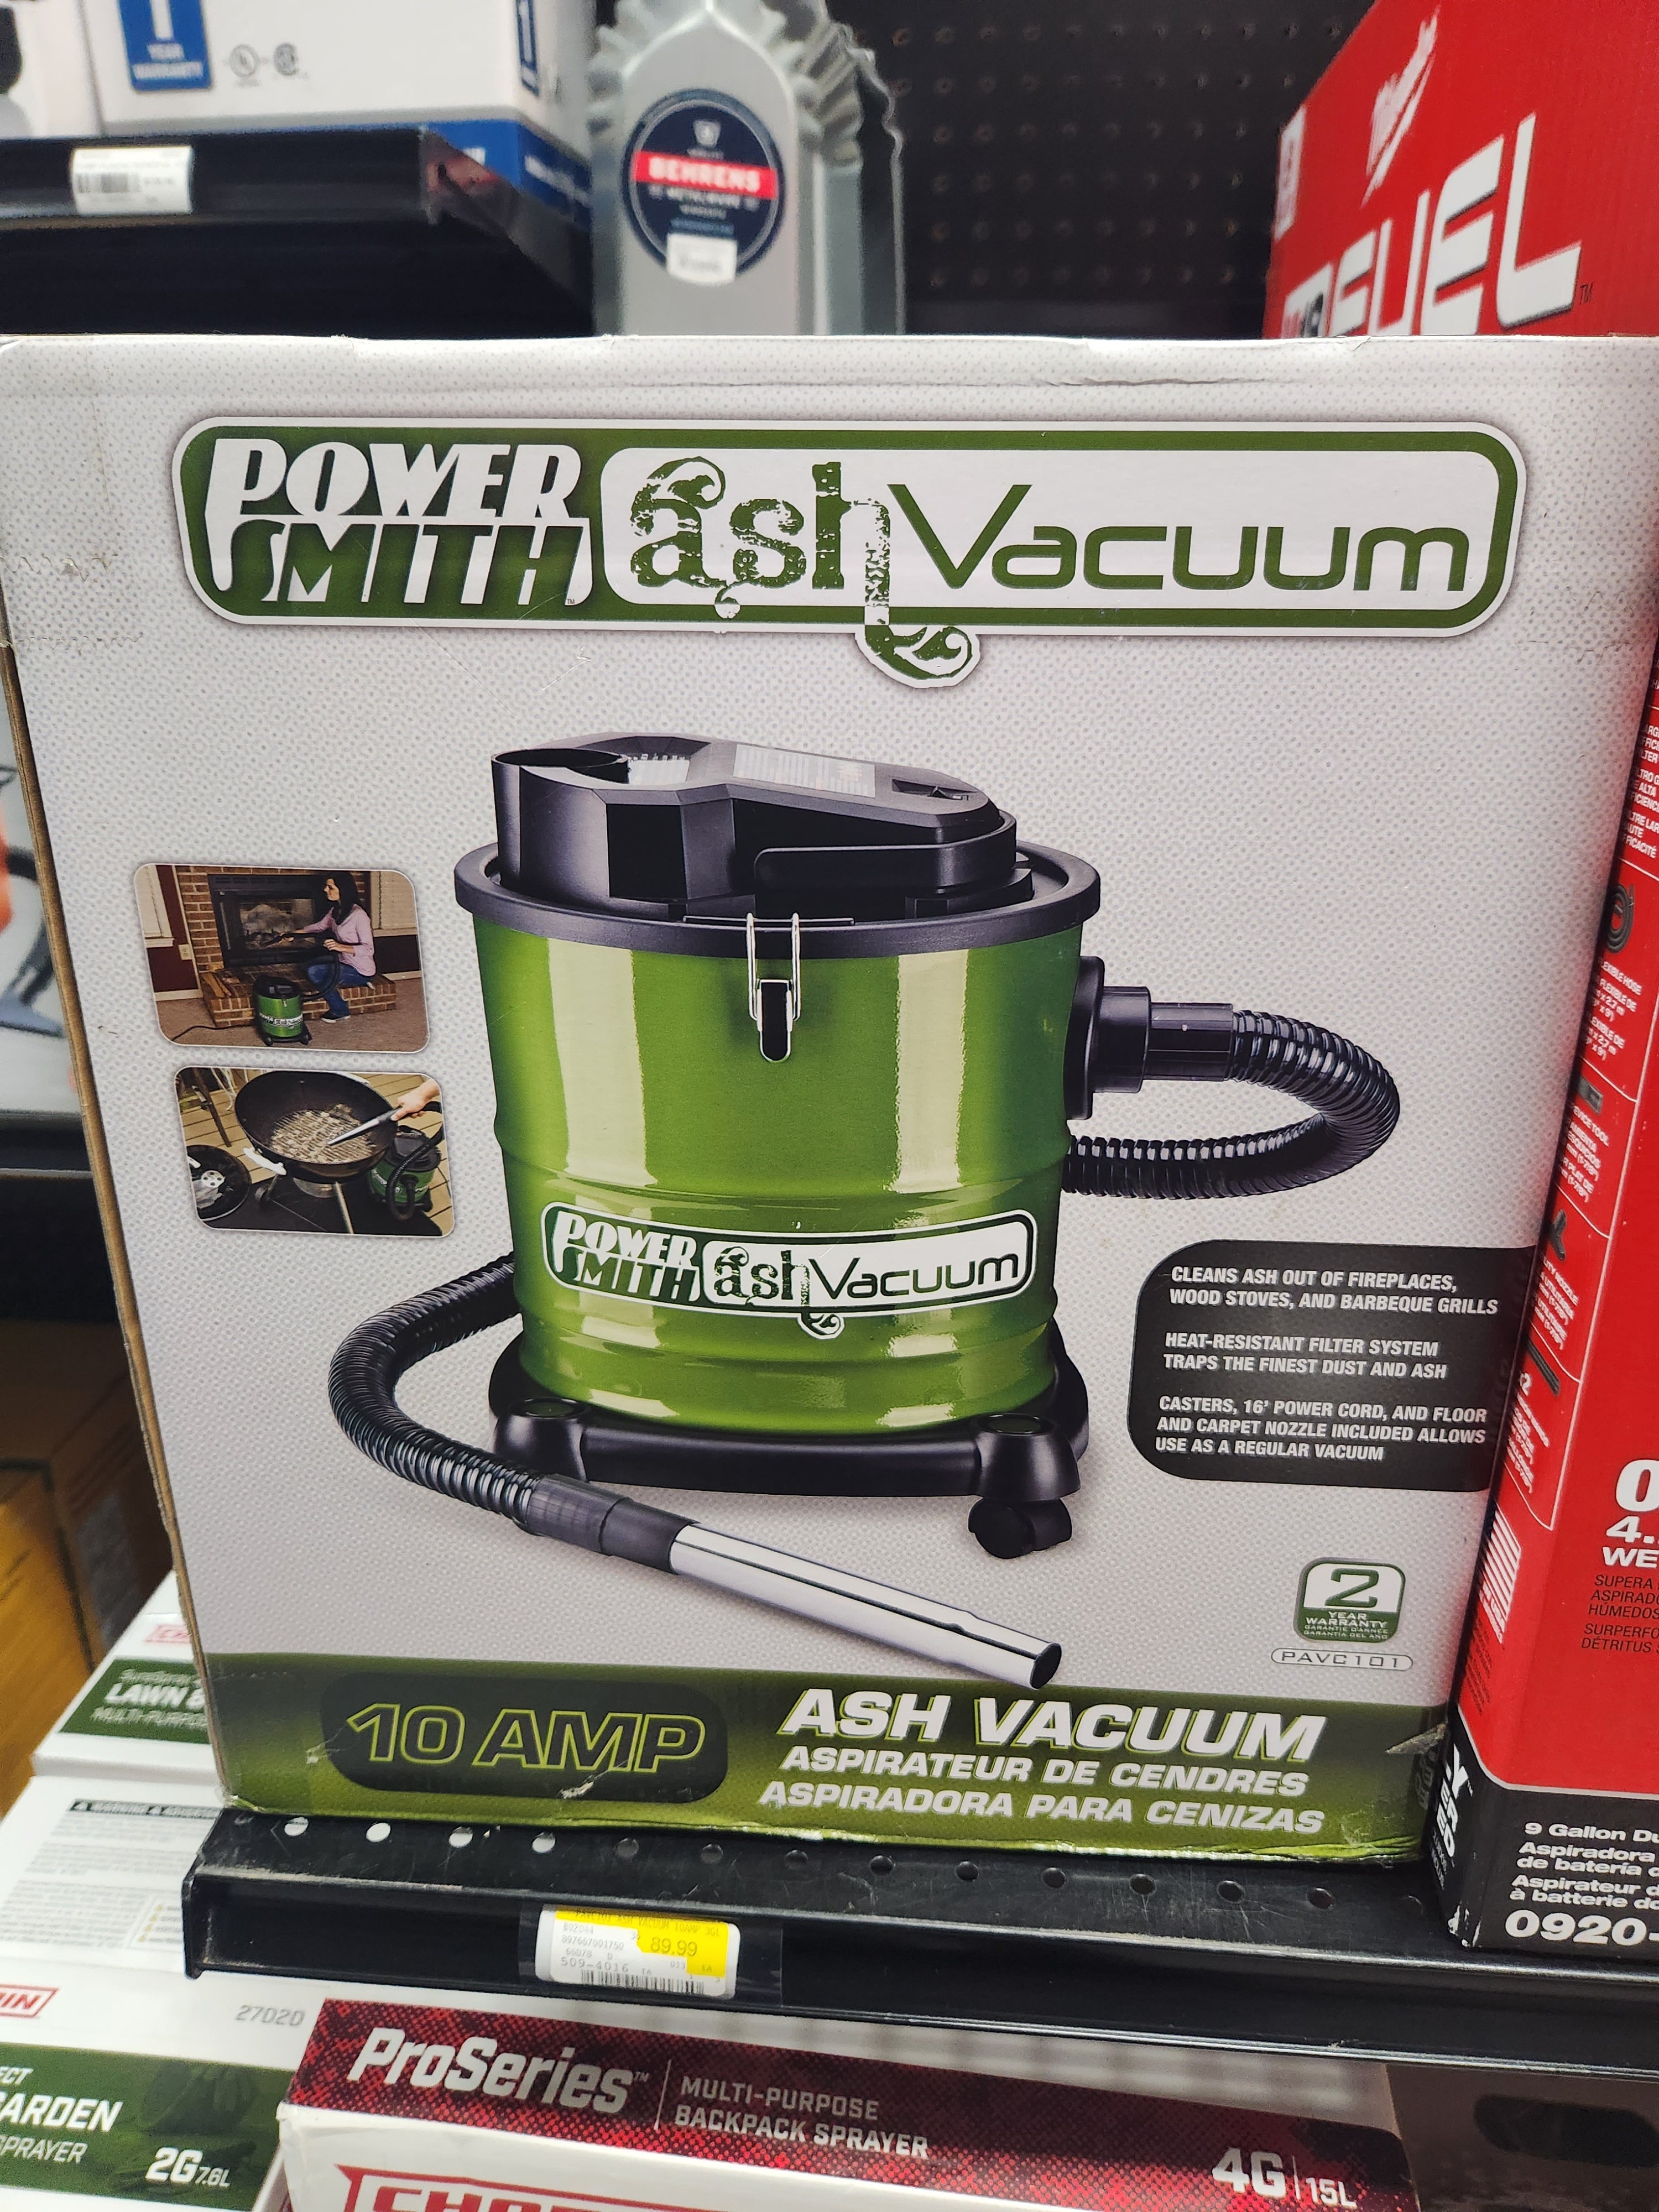 Power Smith Ash Vacuum